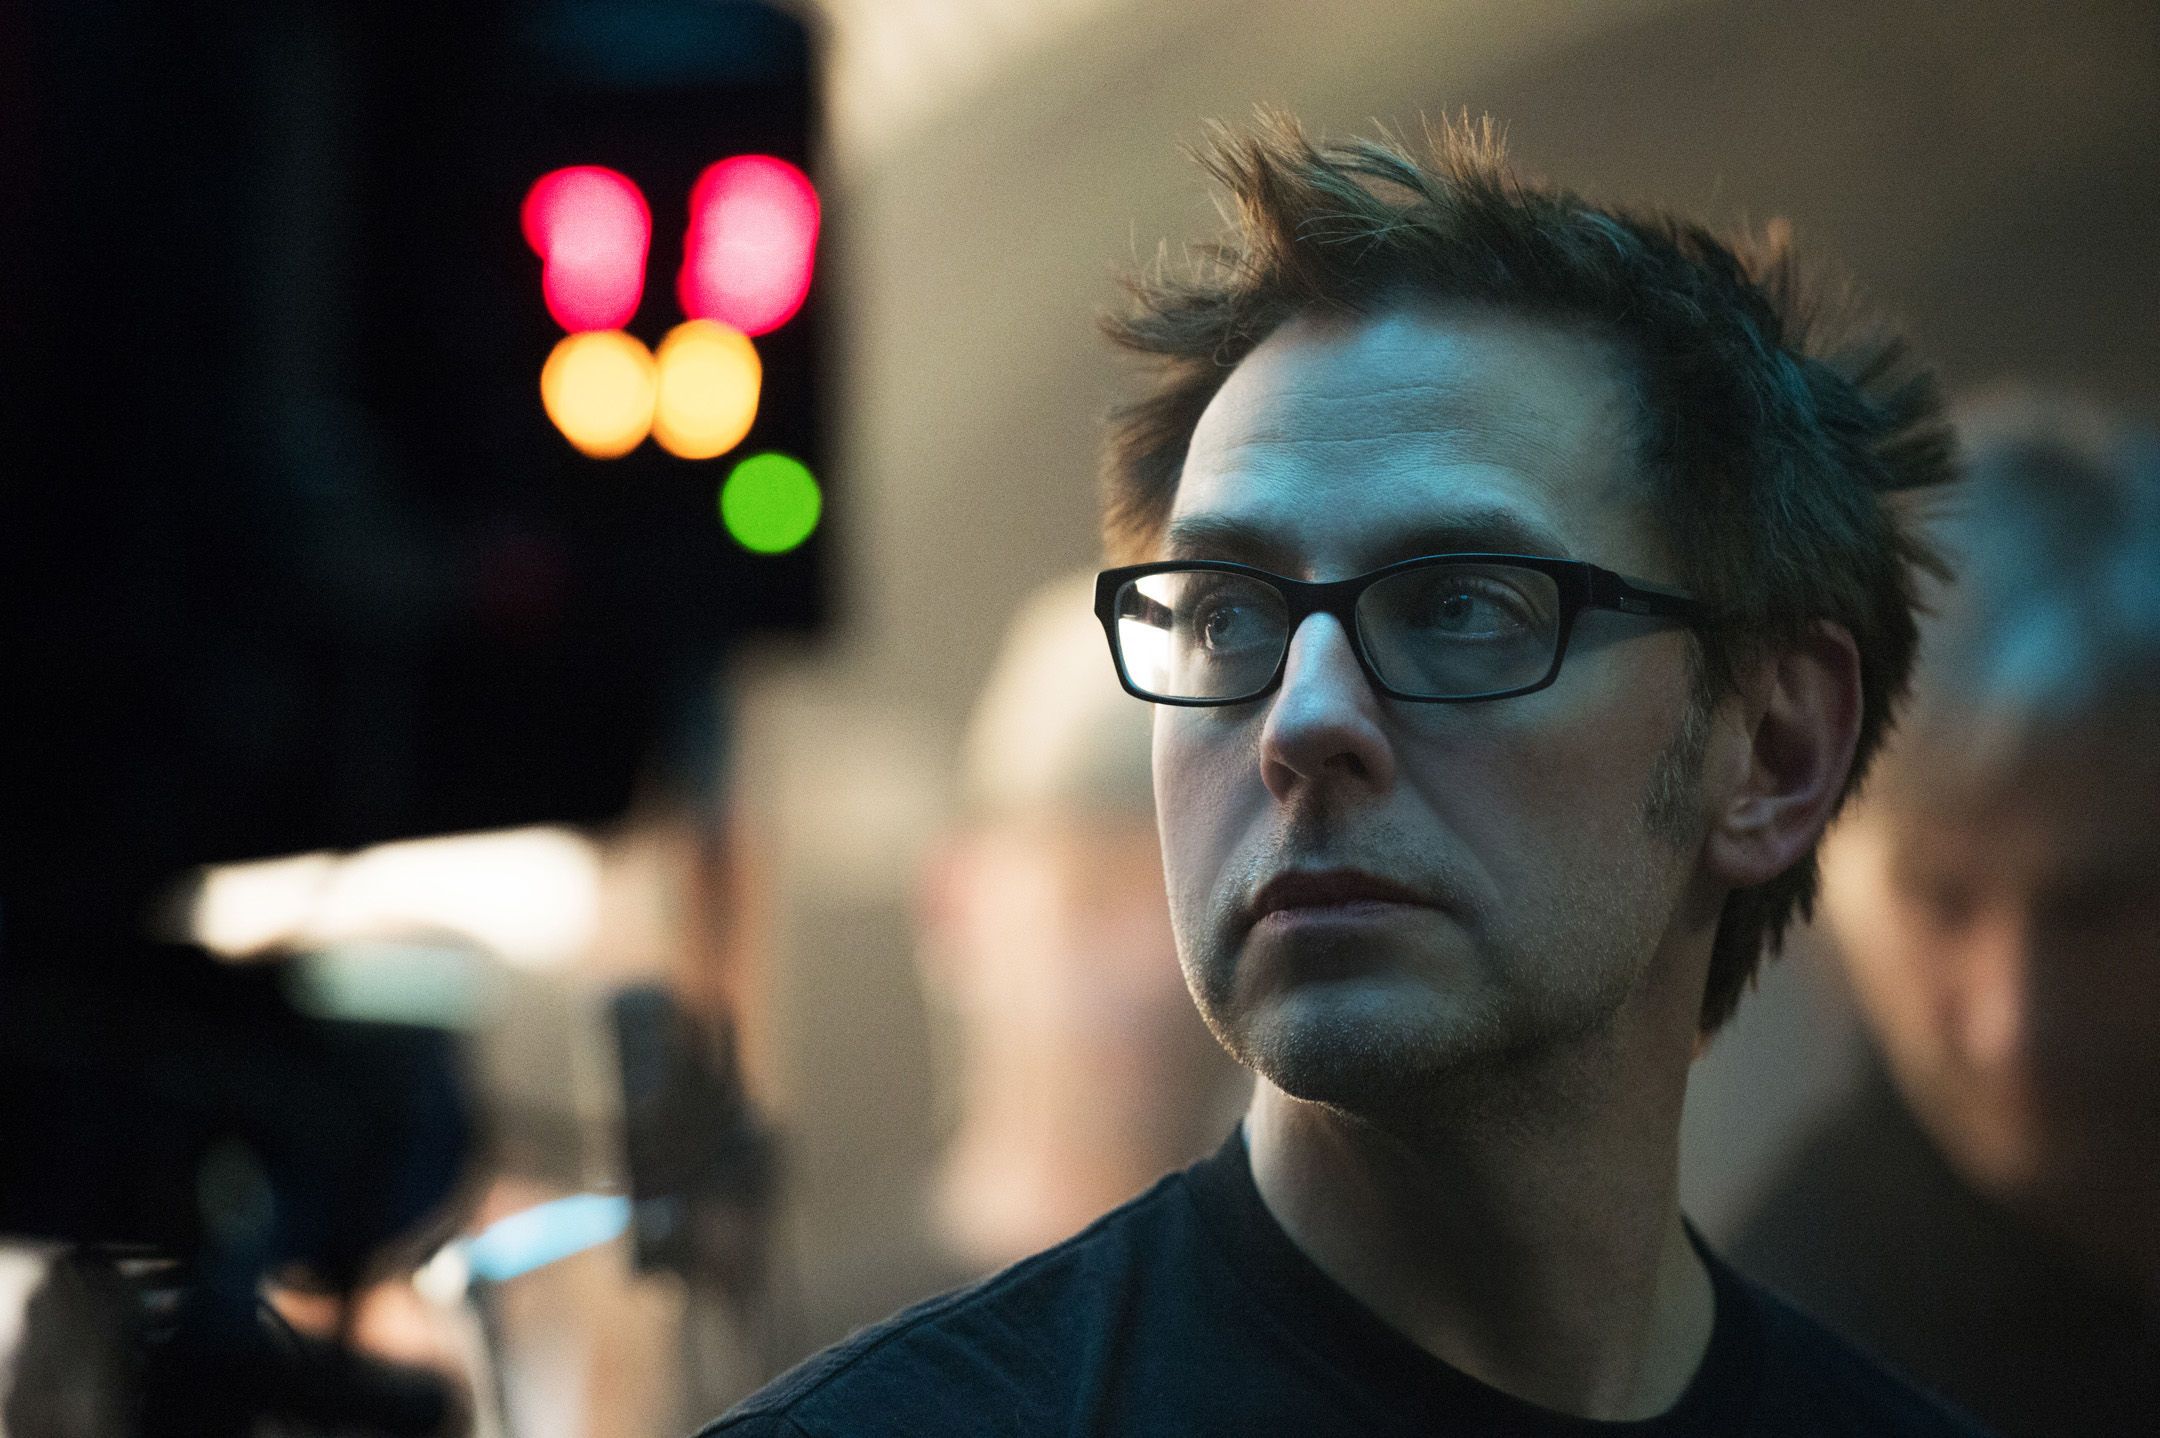 Official Guardians of the Galaxy Set Photo - Director James Gunn